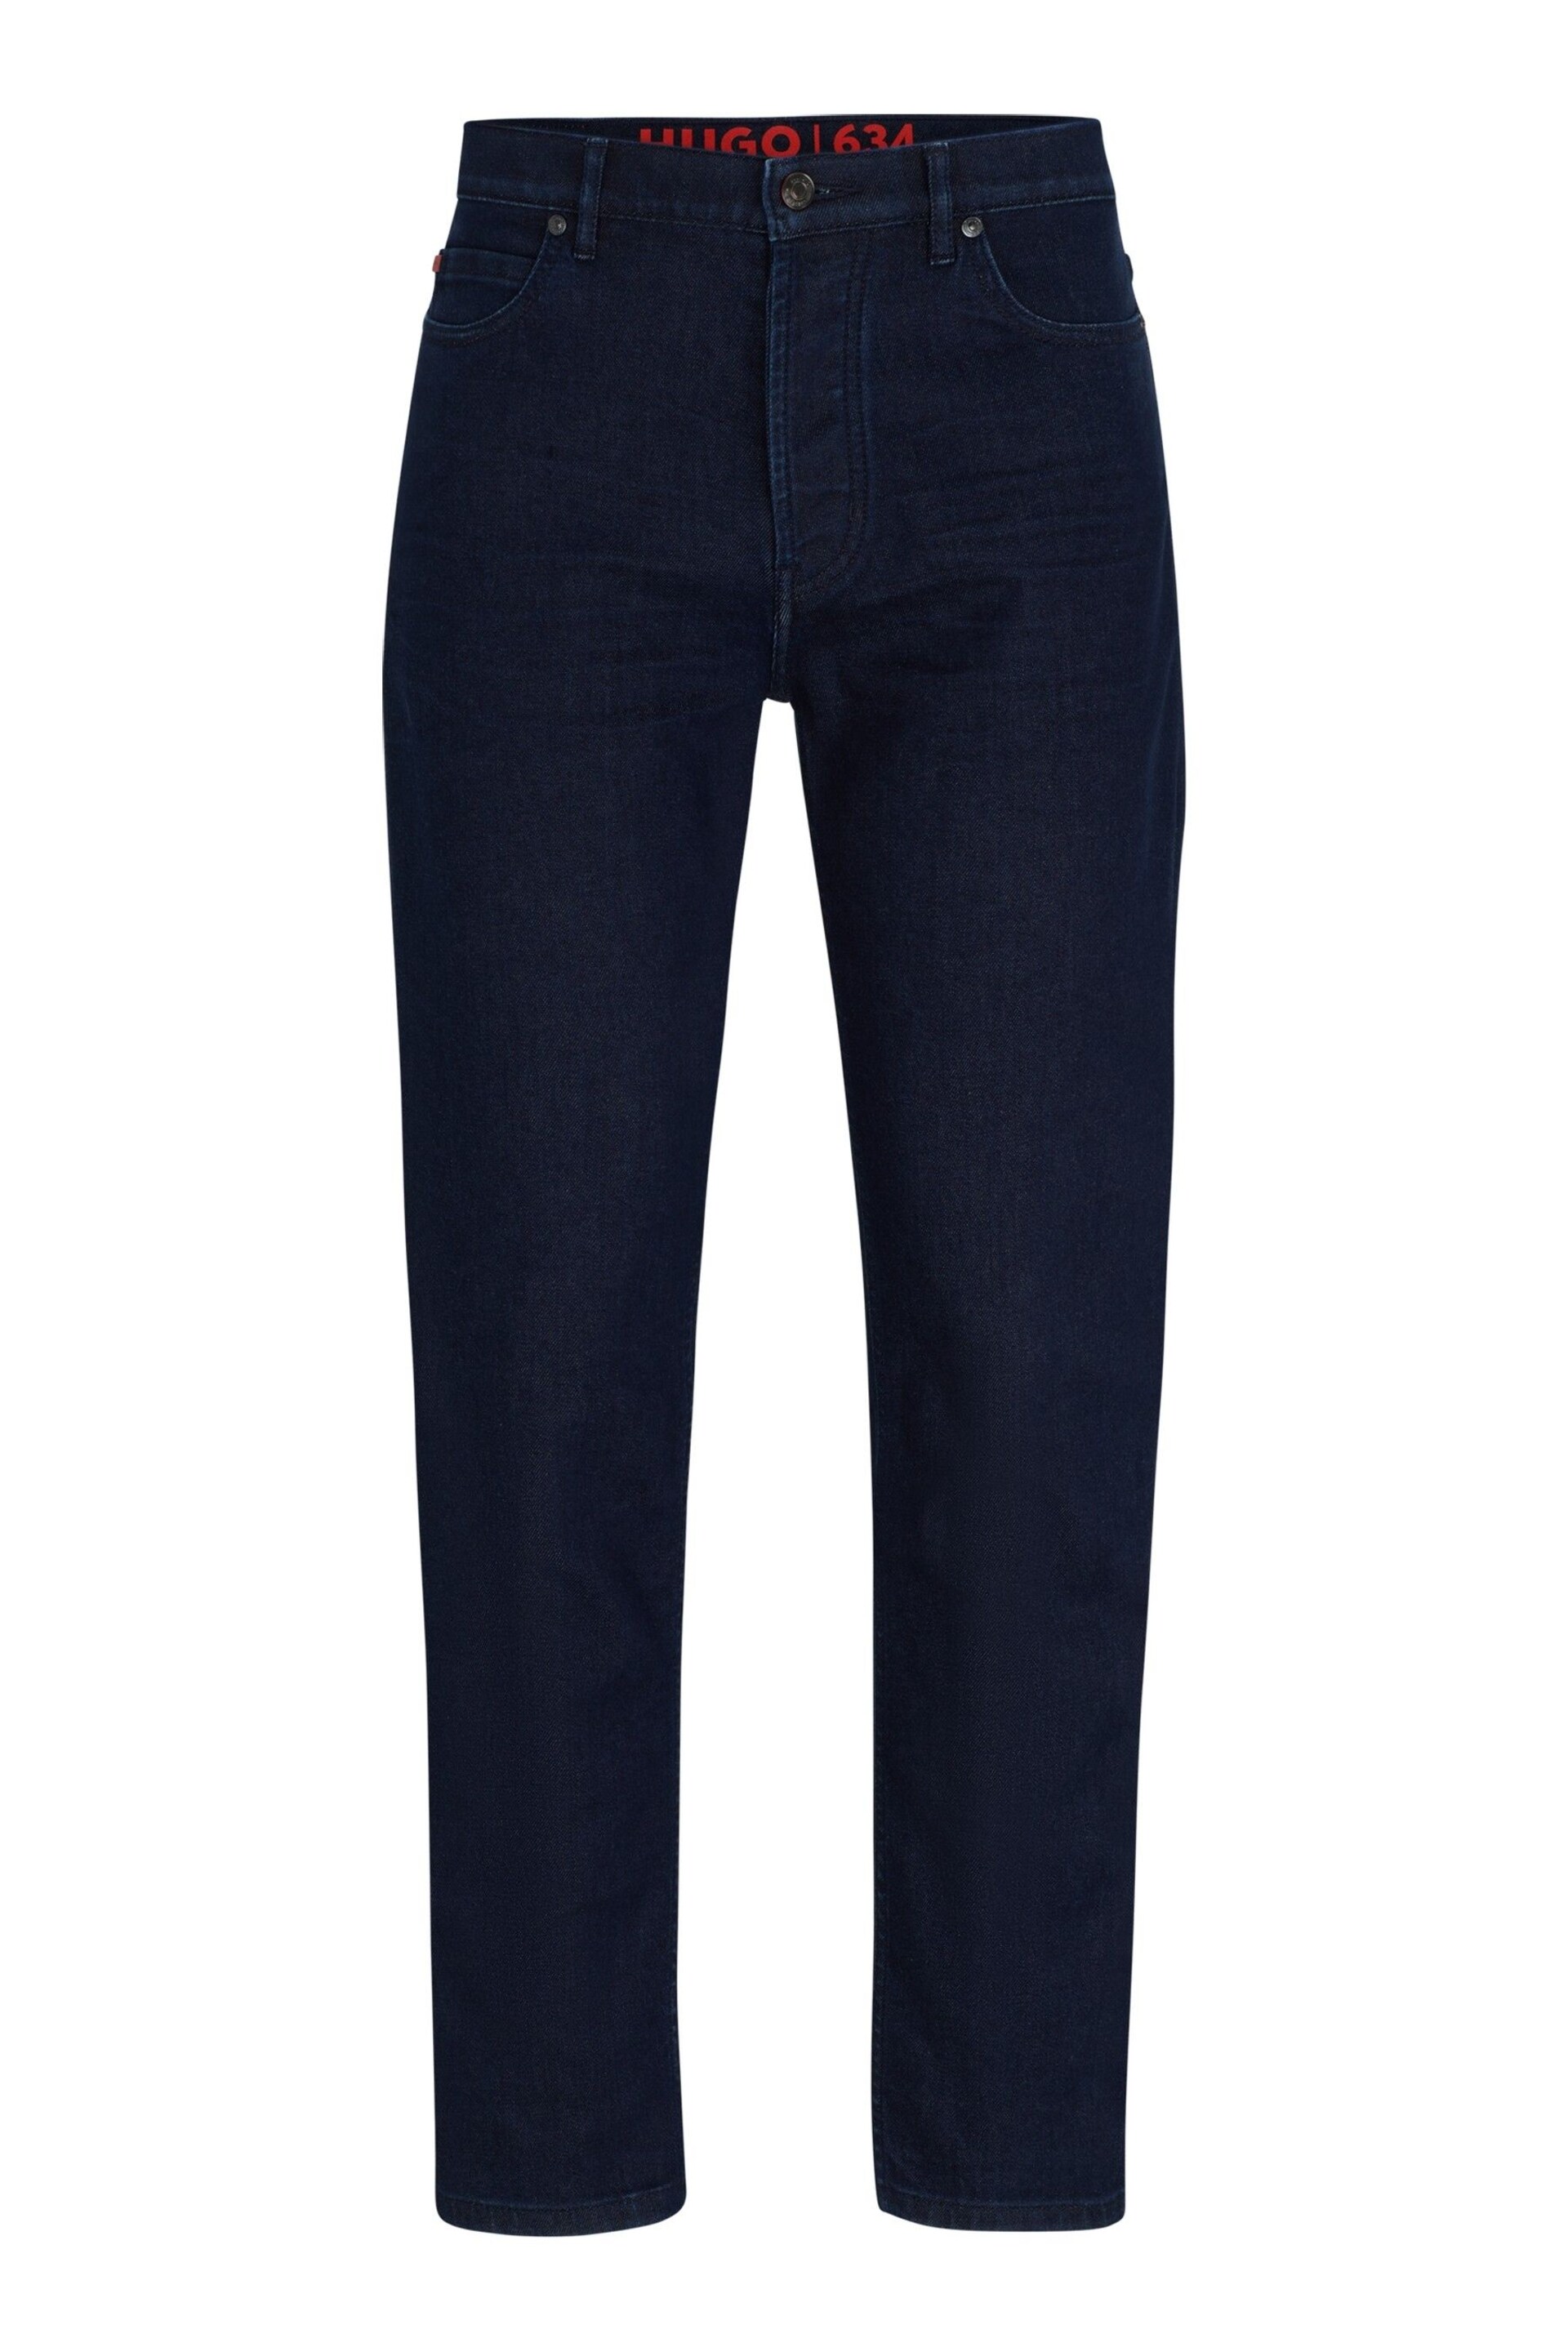 HUGO Tapered-Fit Jeans in Dark-Blue Comfort-Stretch Denim - Image 5 of 5